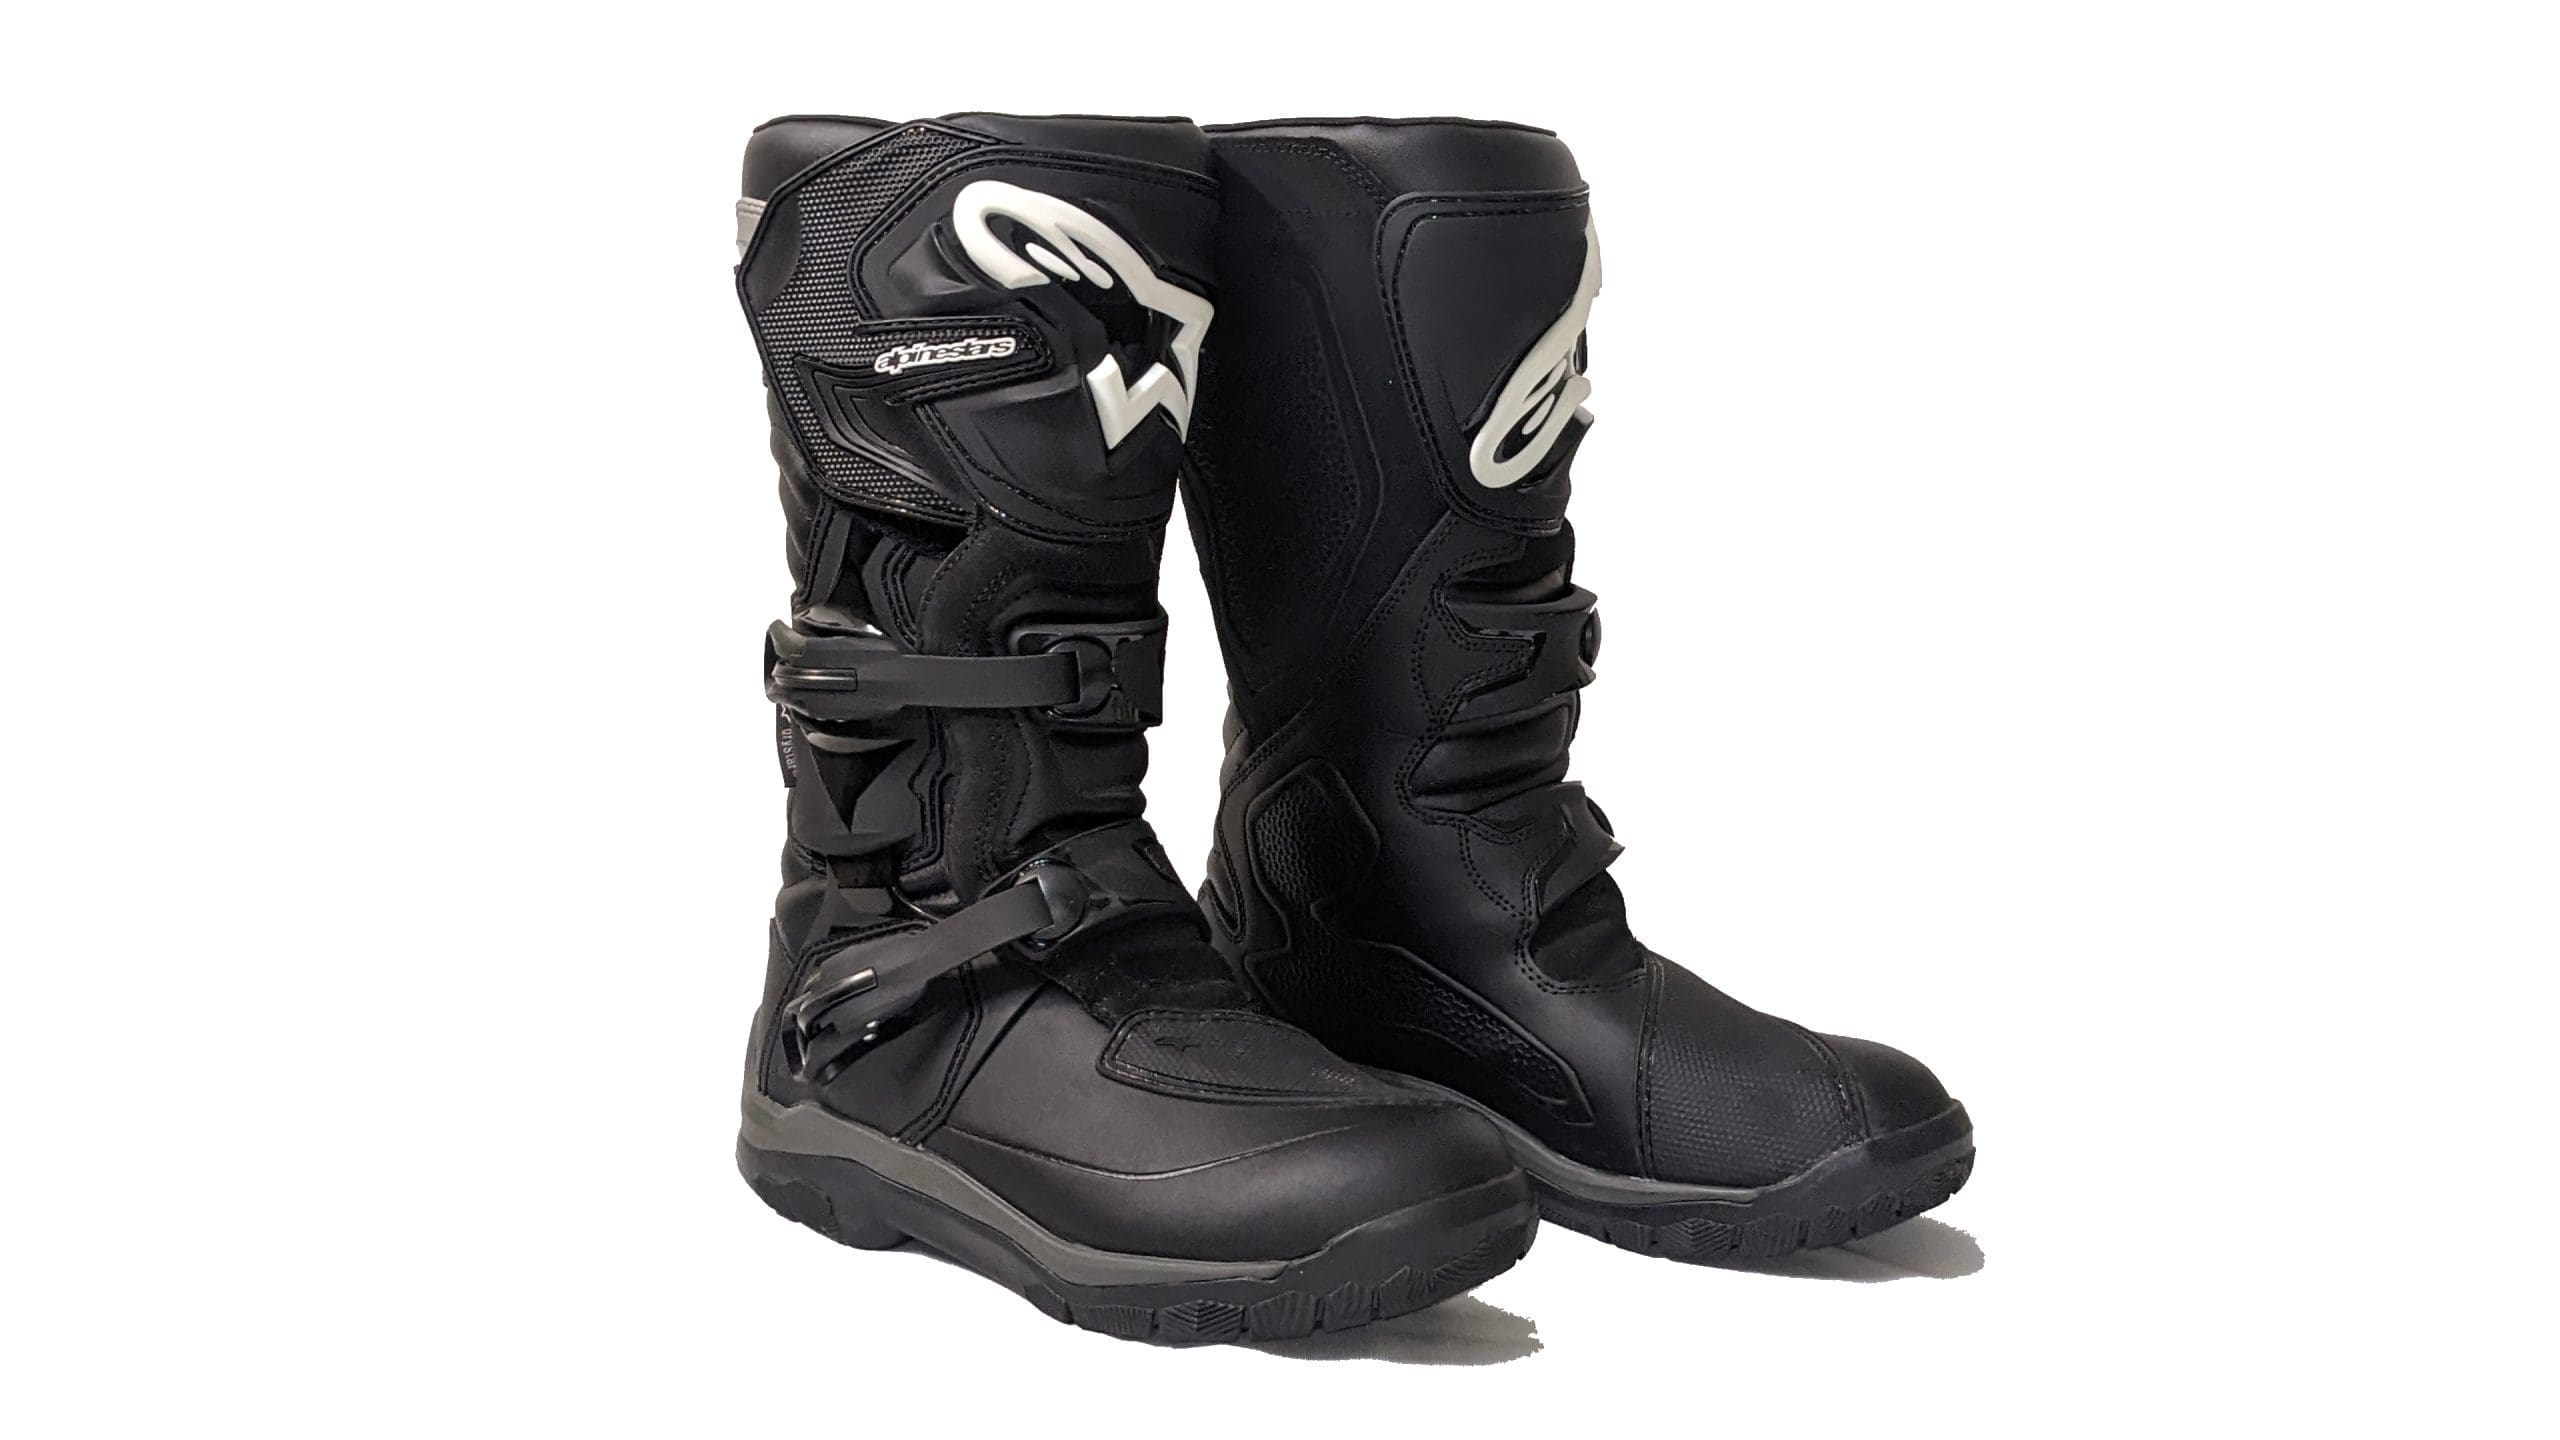 Studio image of Alpinestars Corozal Adventure Drystar boots.